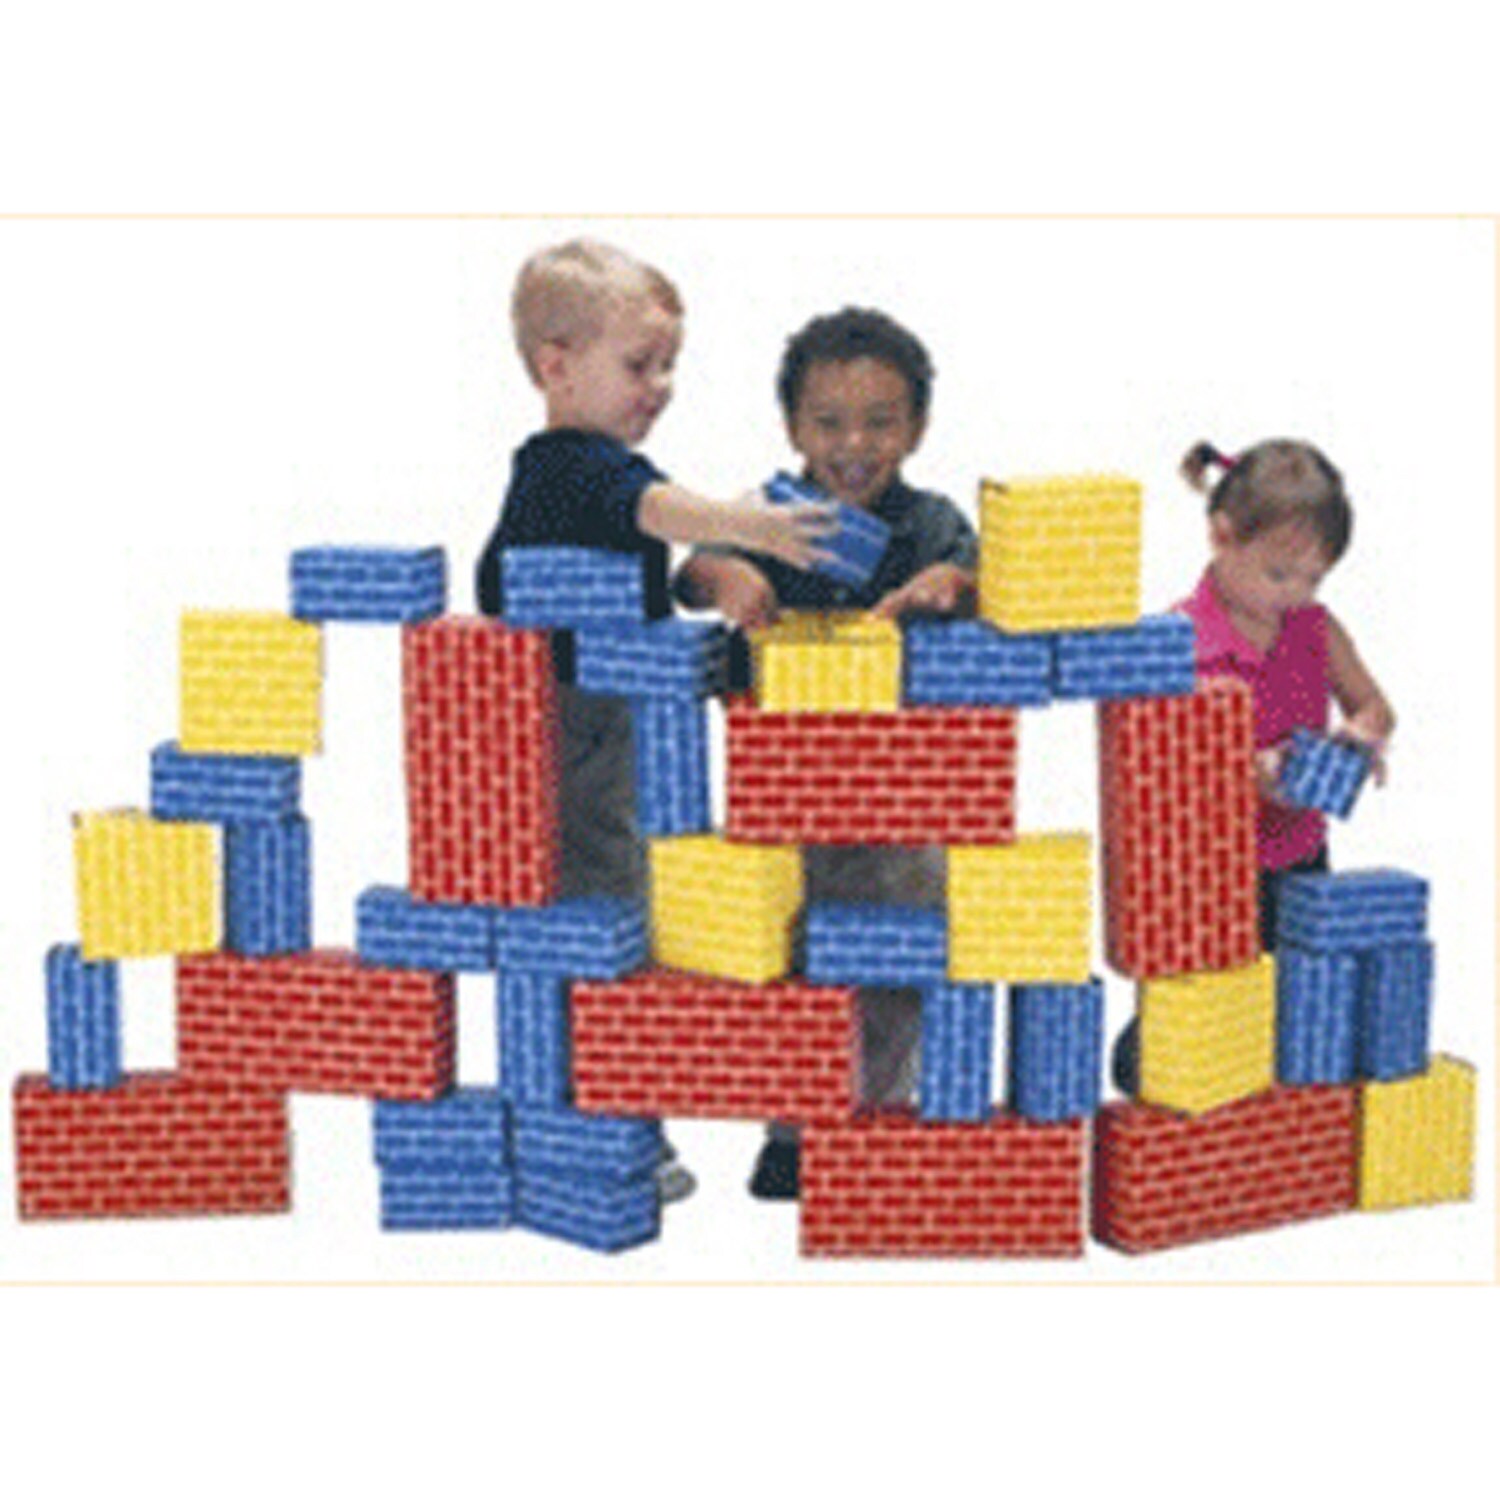 build your house building blocks play set